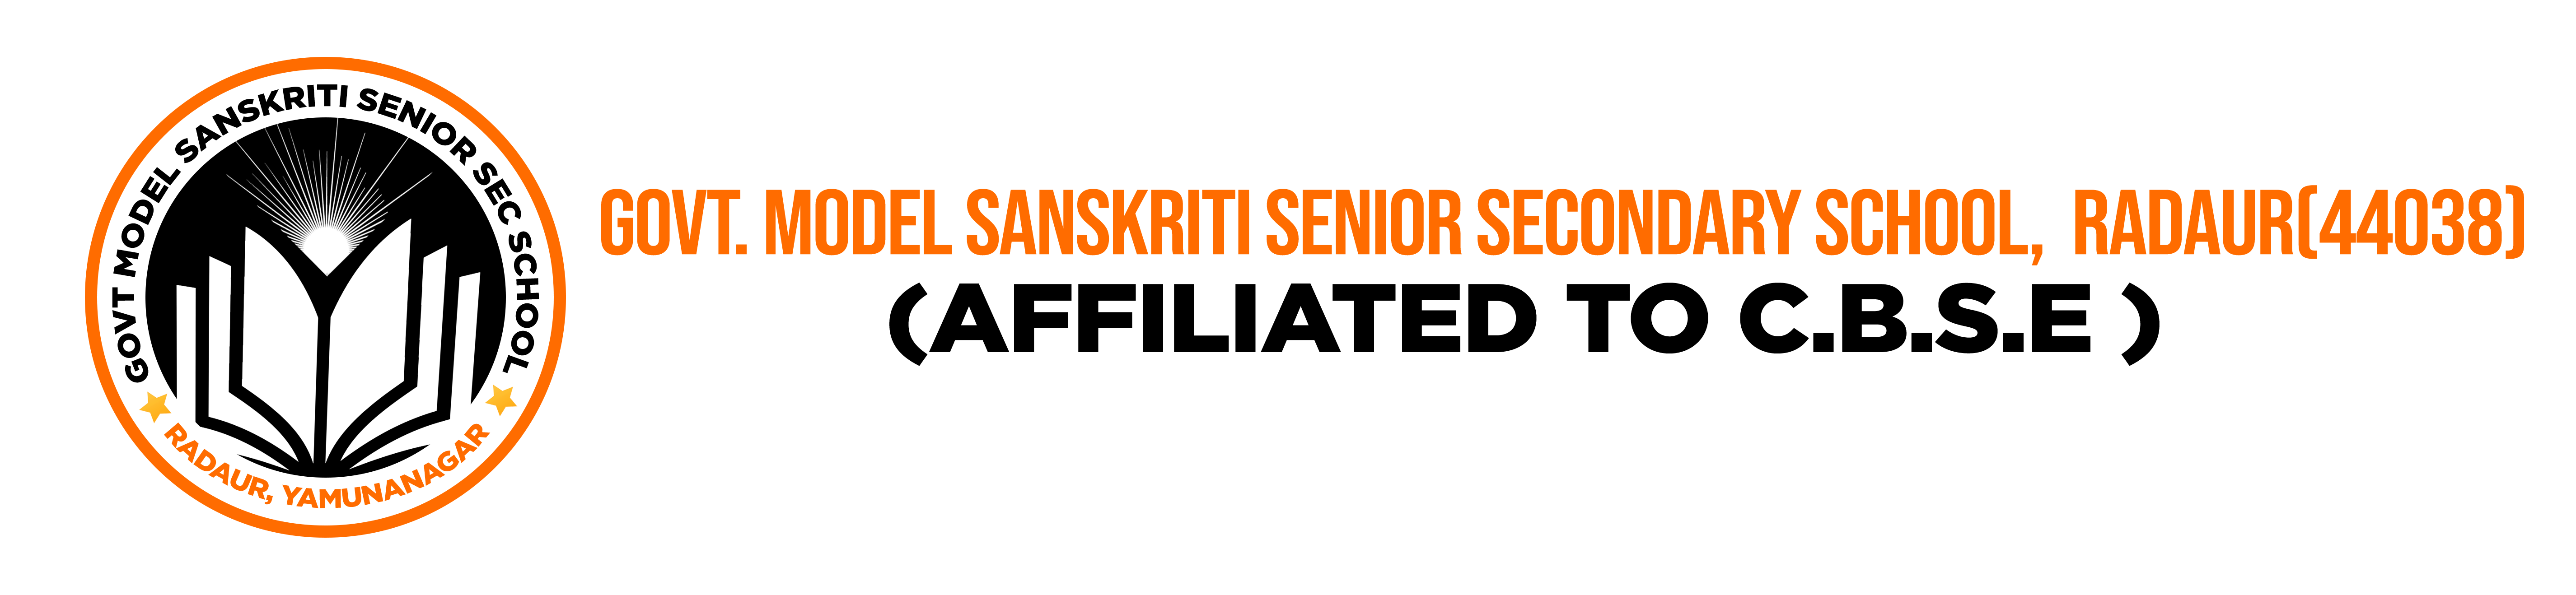 fee-structure-govt-model-sanskriti-senior-secondary-school-radaur